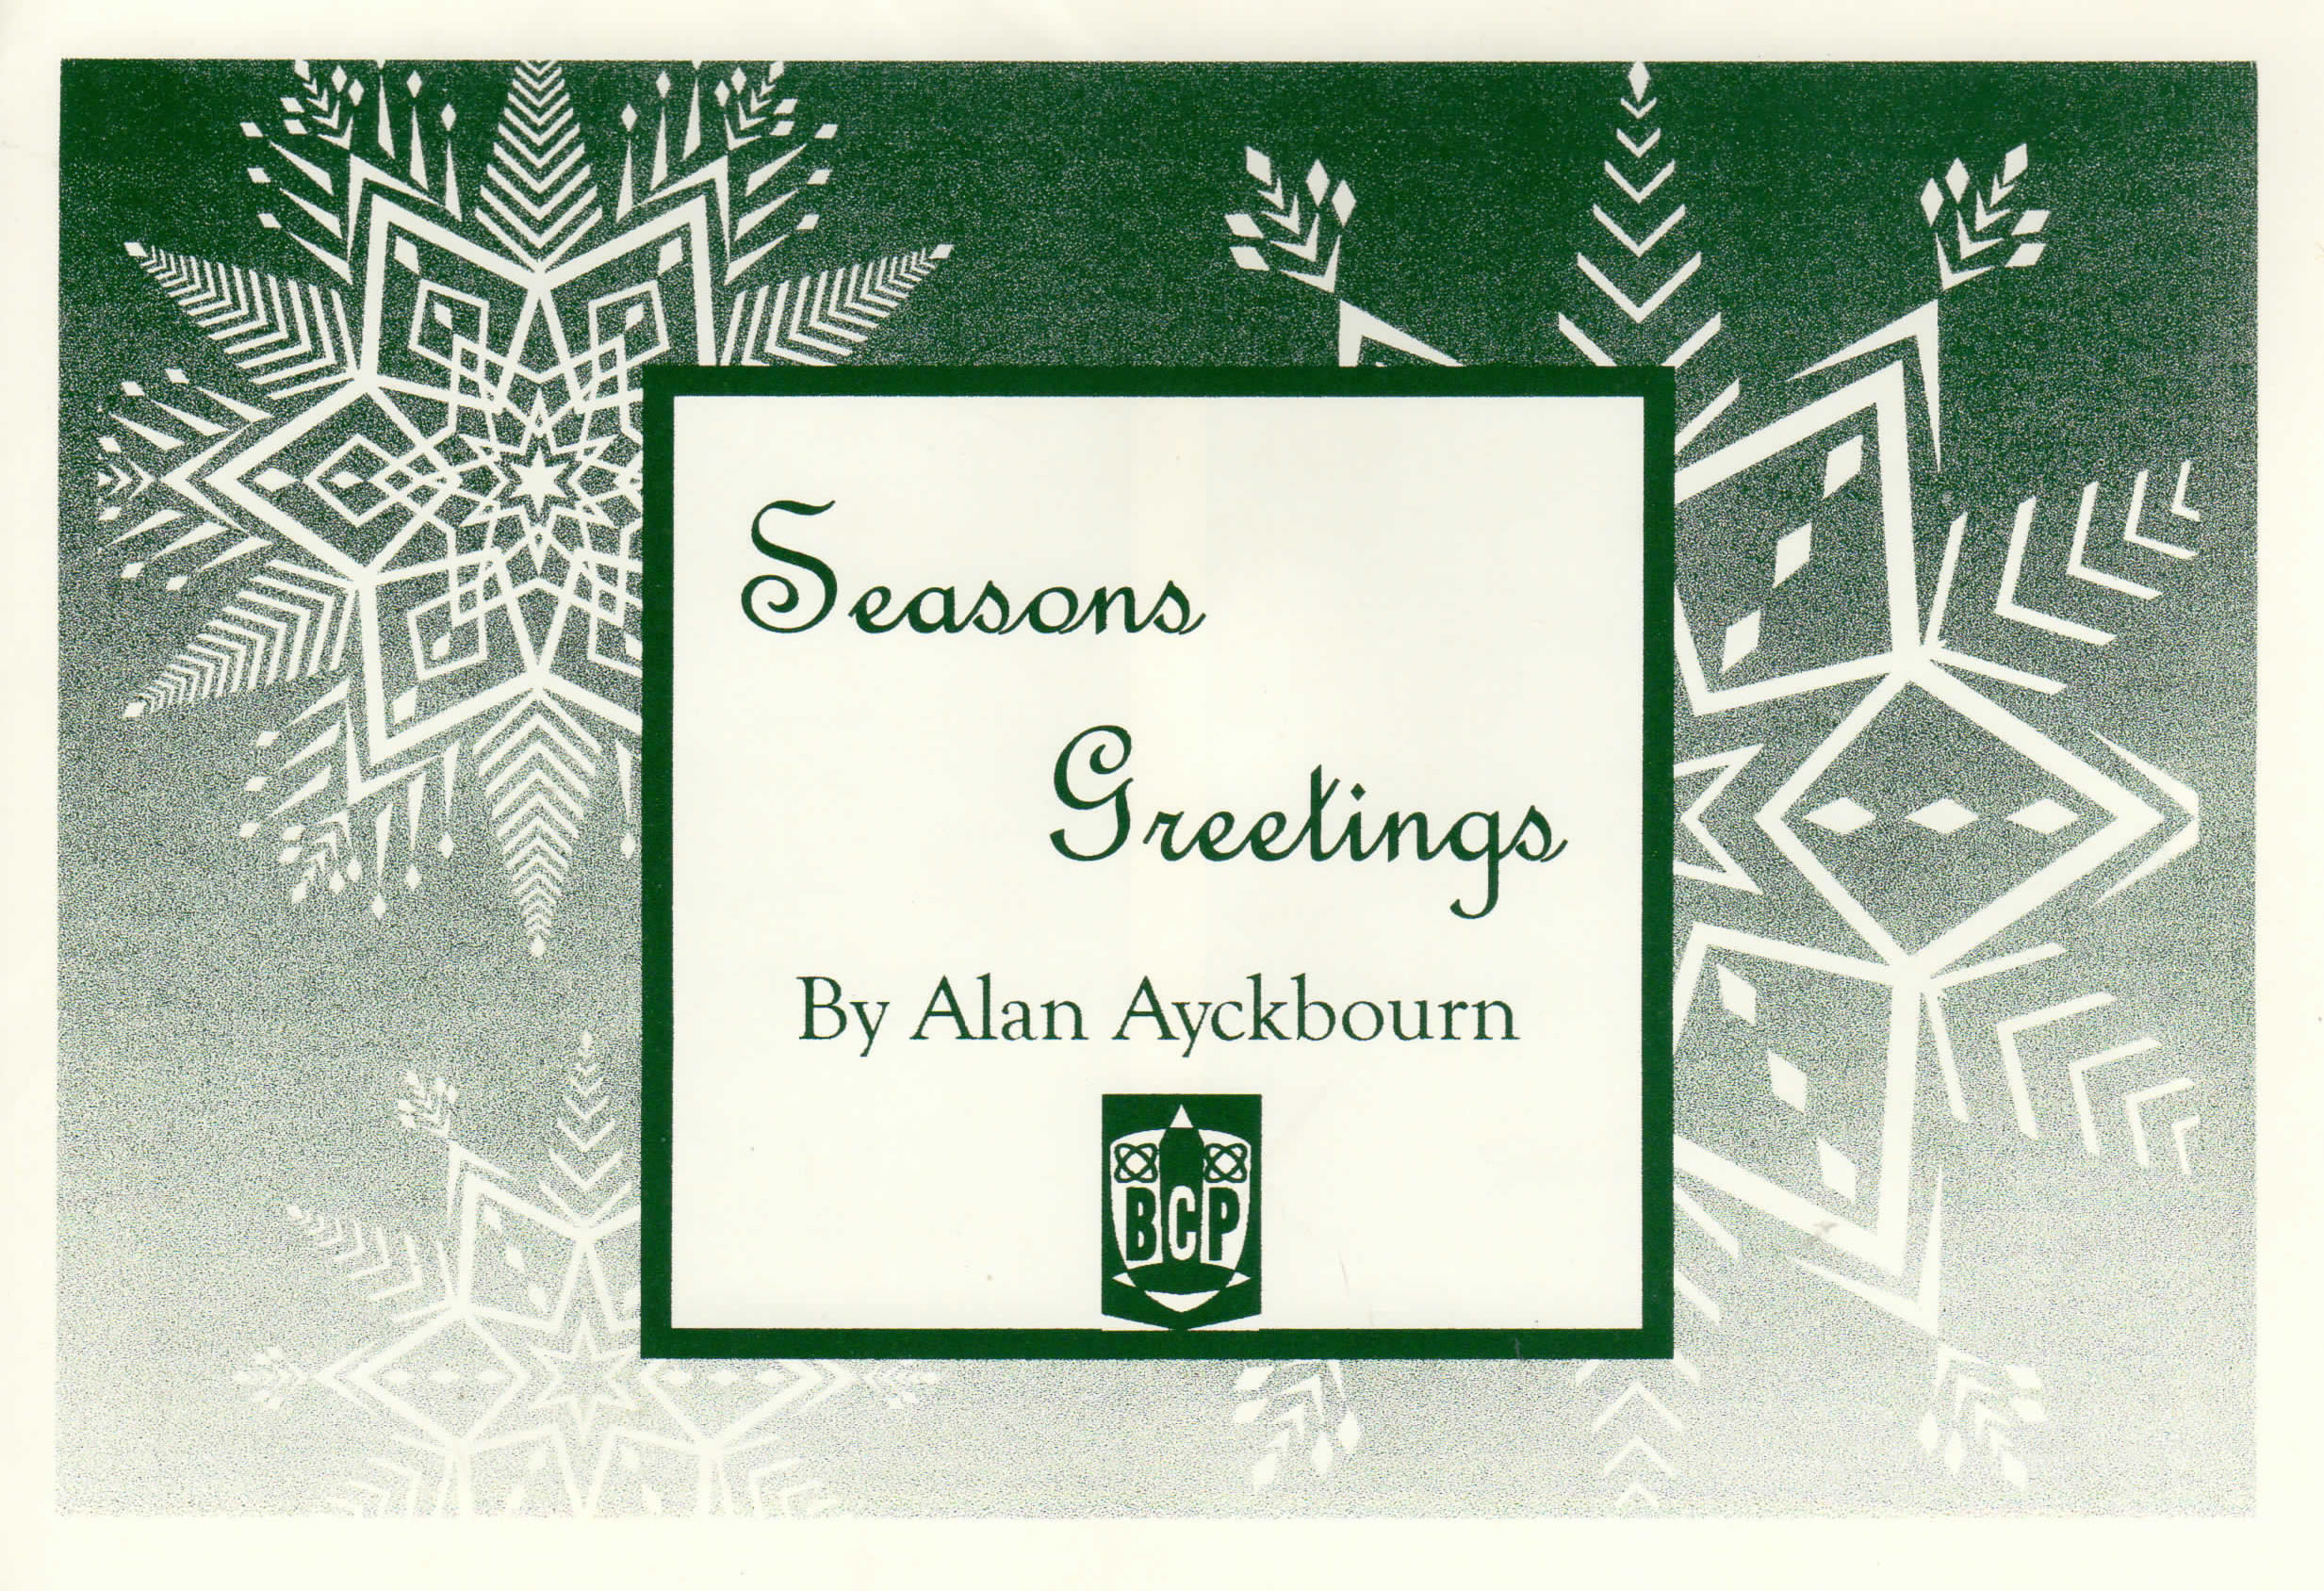 Season’s Greetings by Alan Ayckbourn